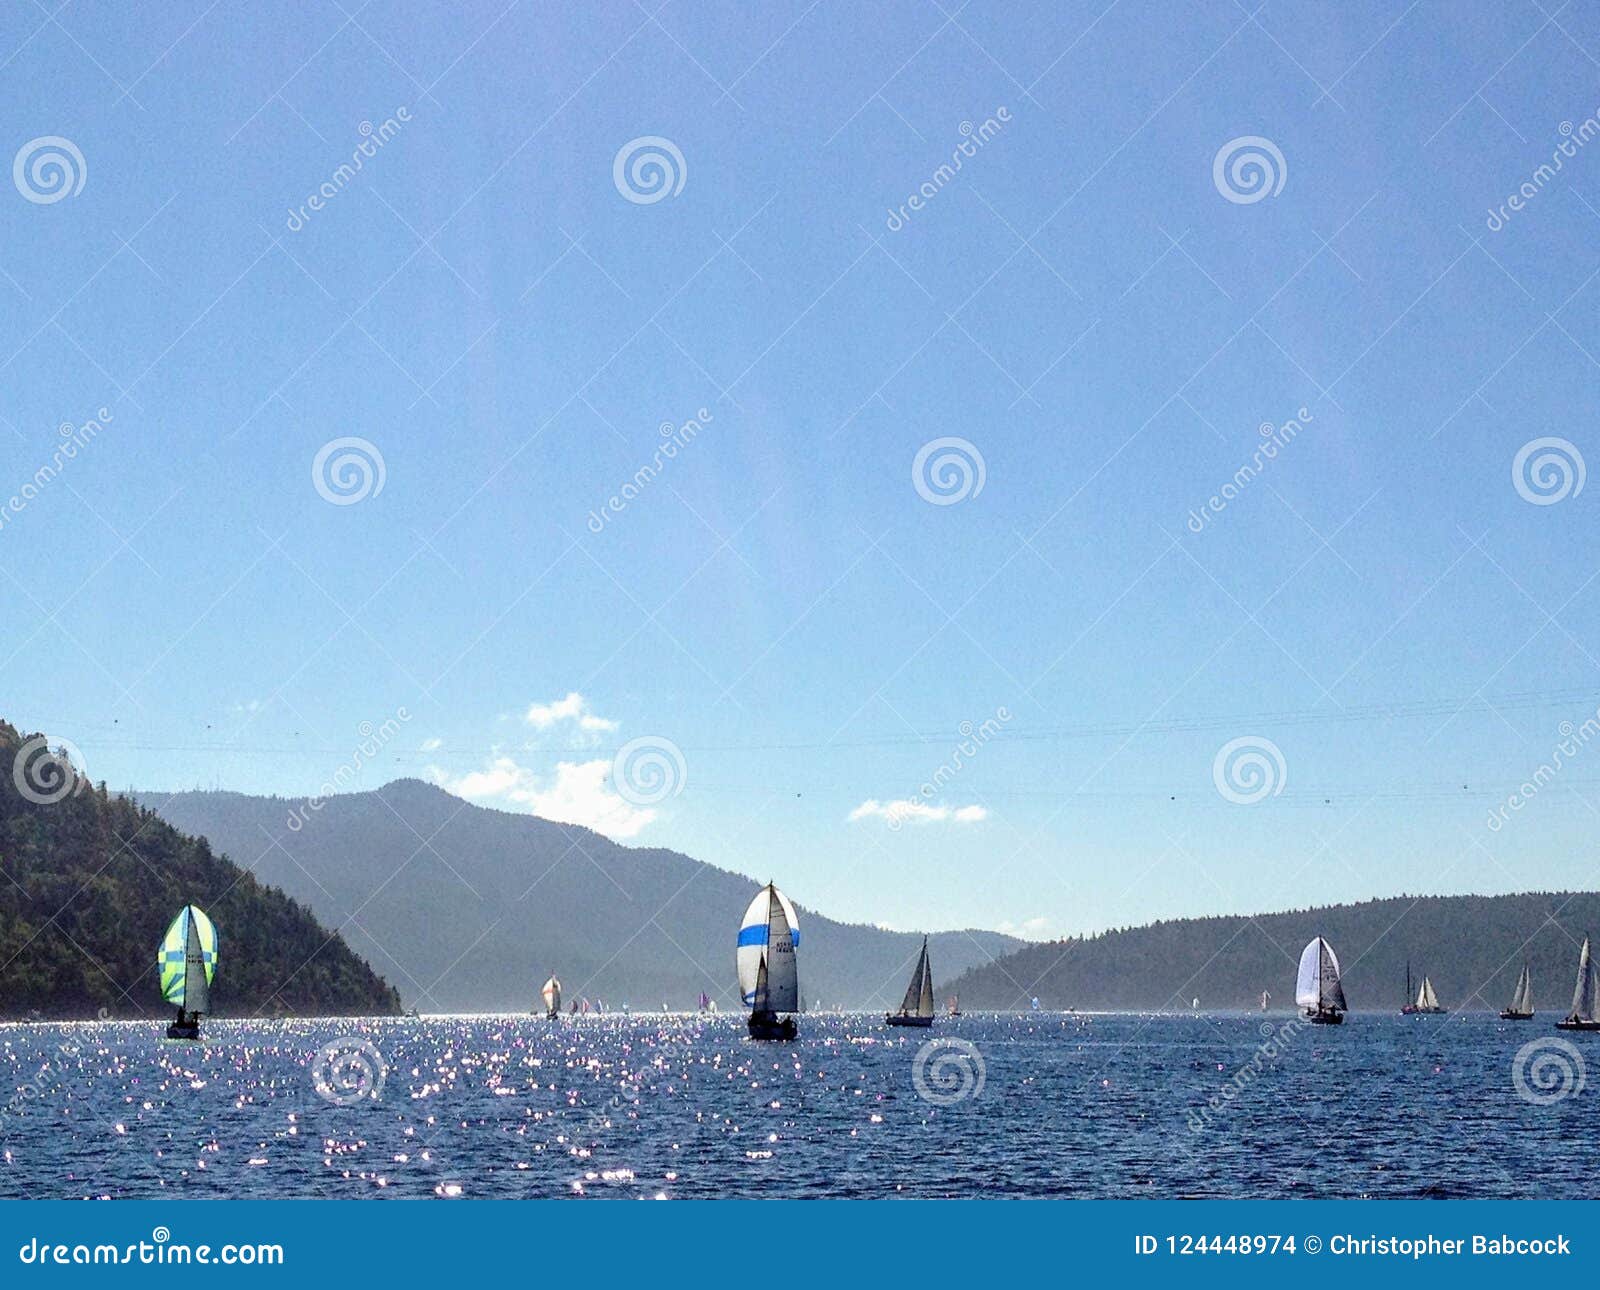 armada of sailboats off the coast of vancouver island, british c